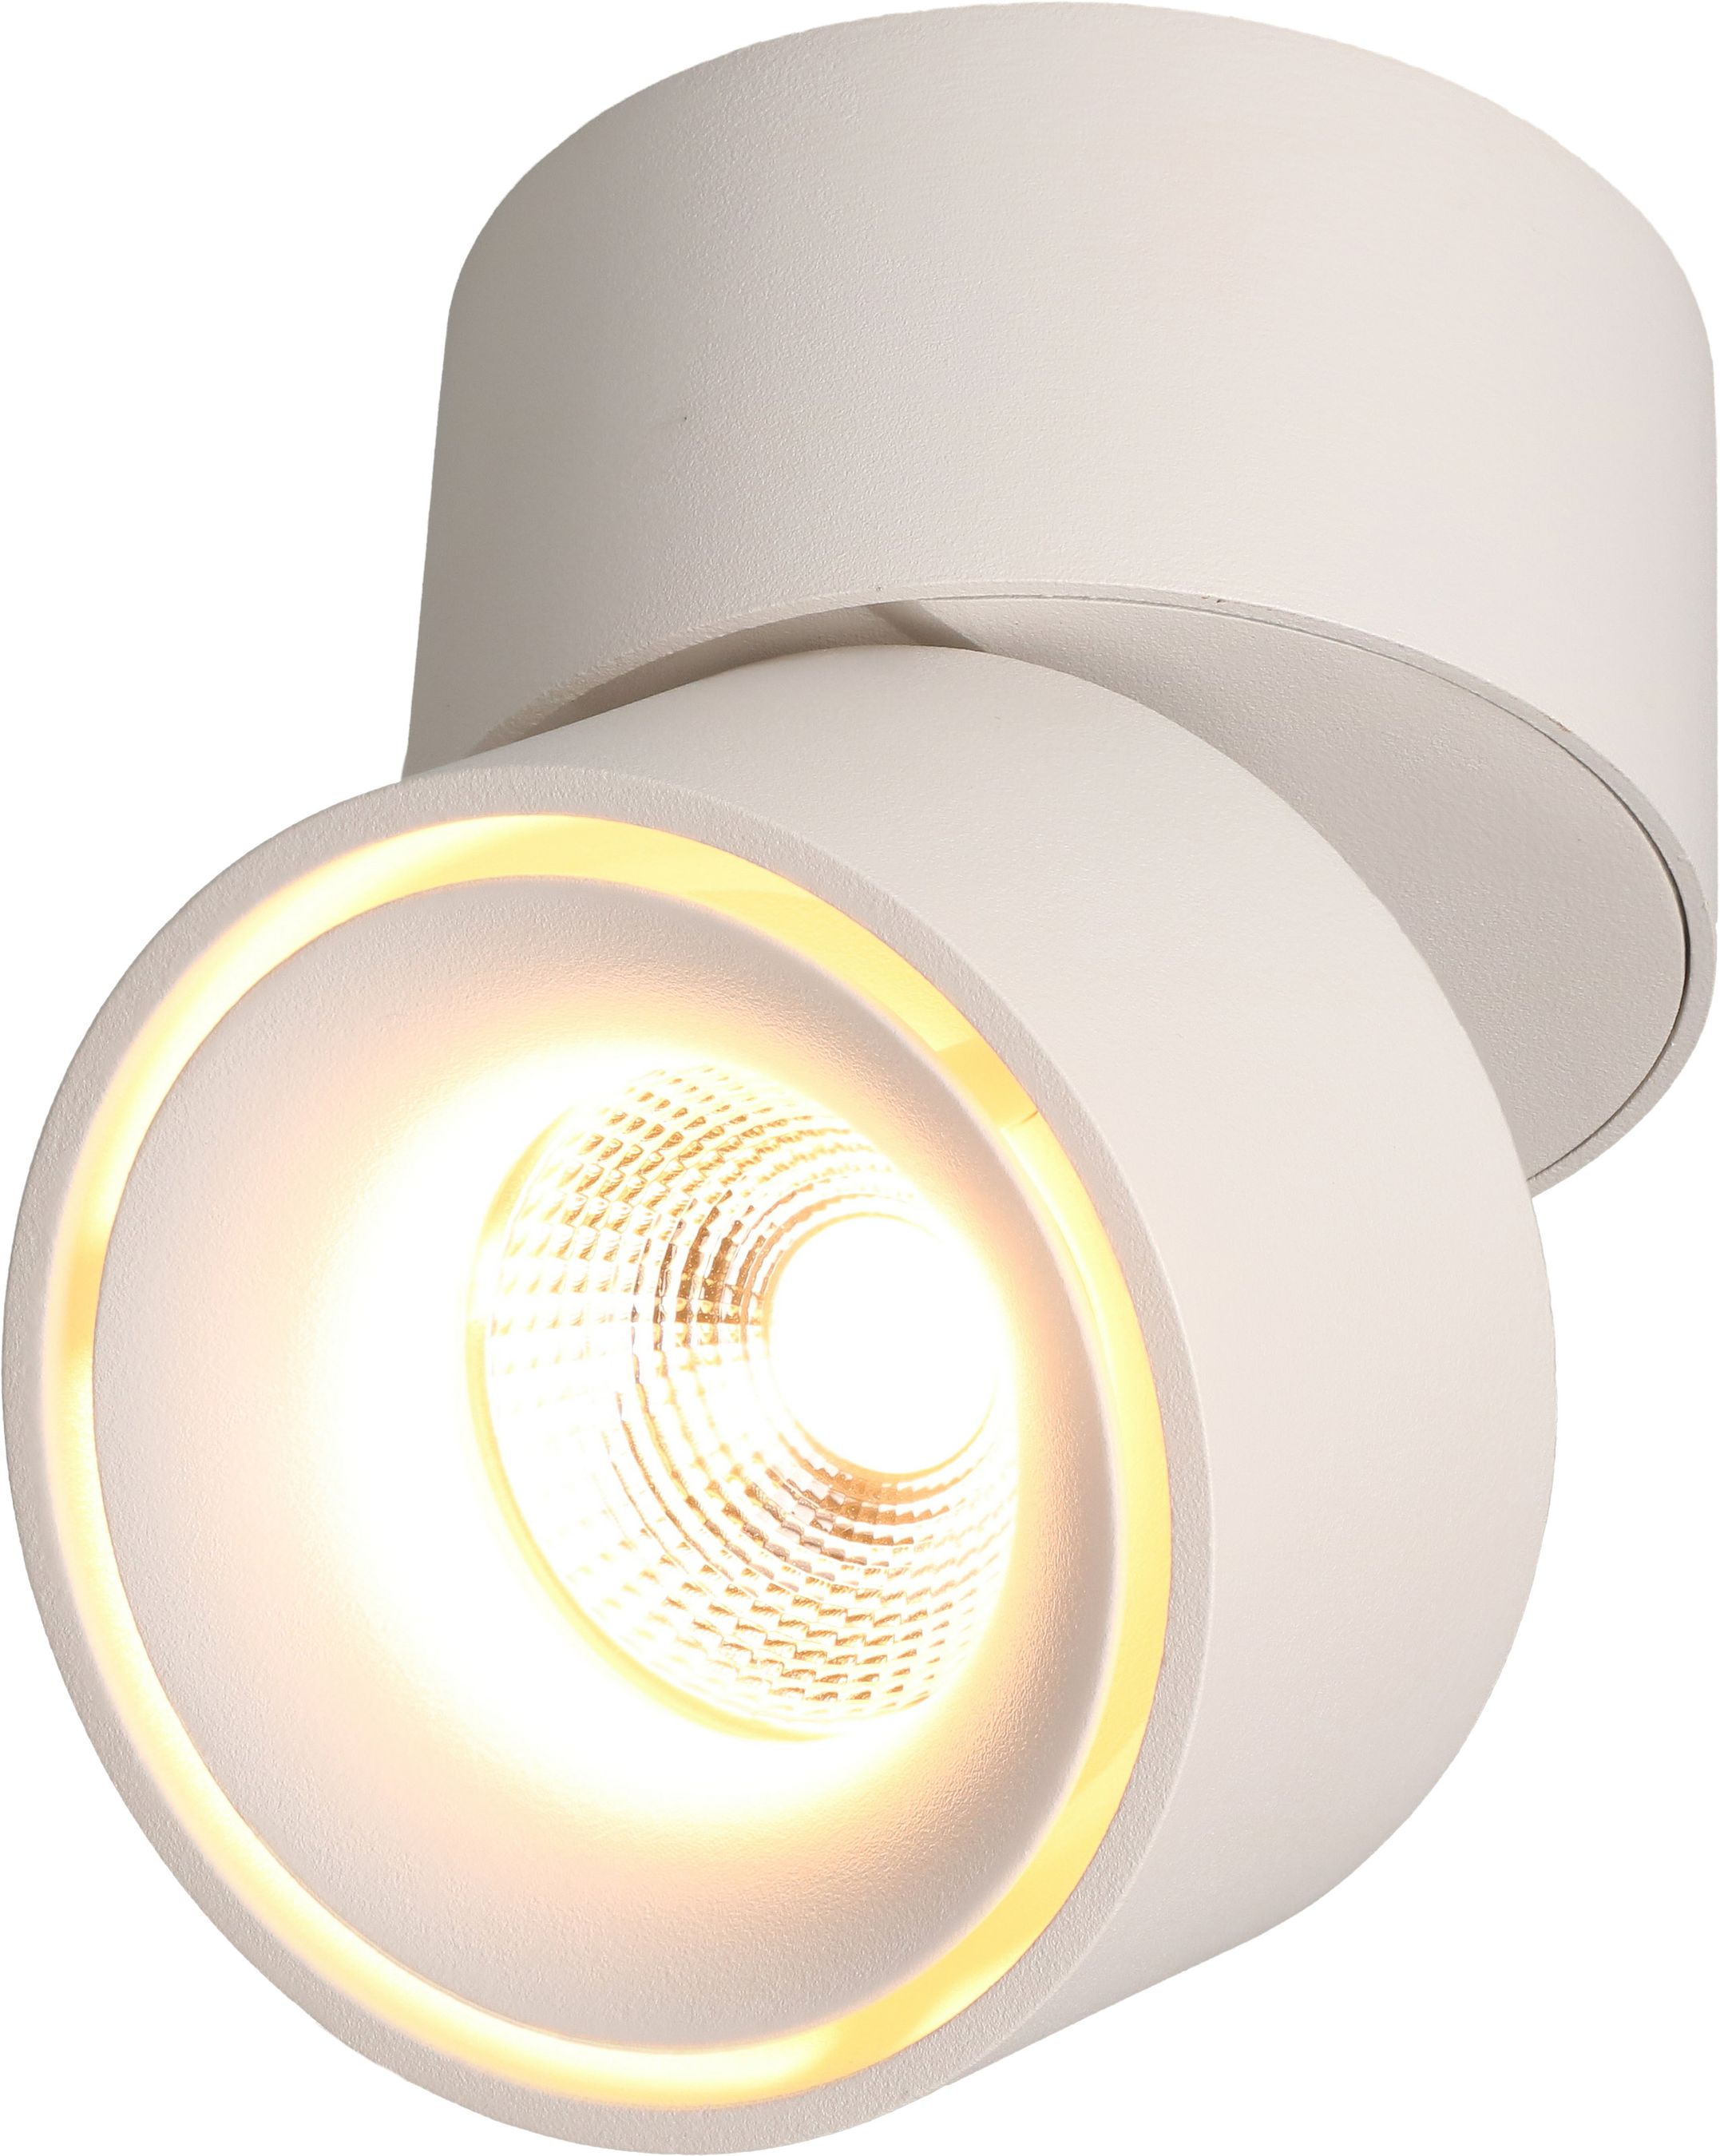 LED plafonnier SHINE blanc mat 3000K 760lm 36°